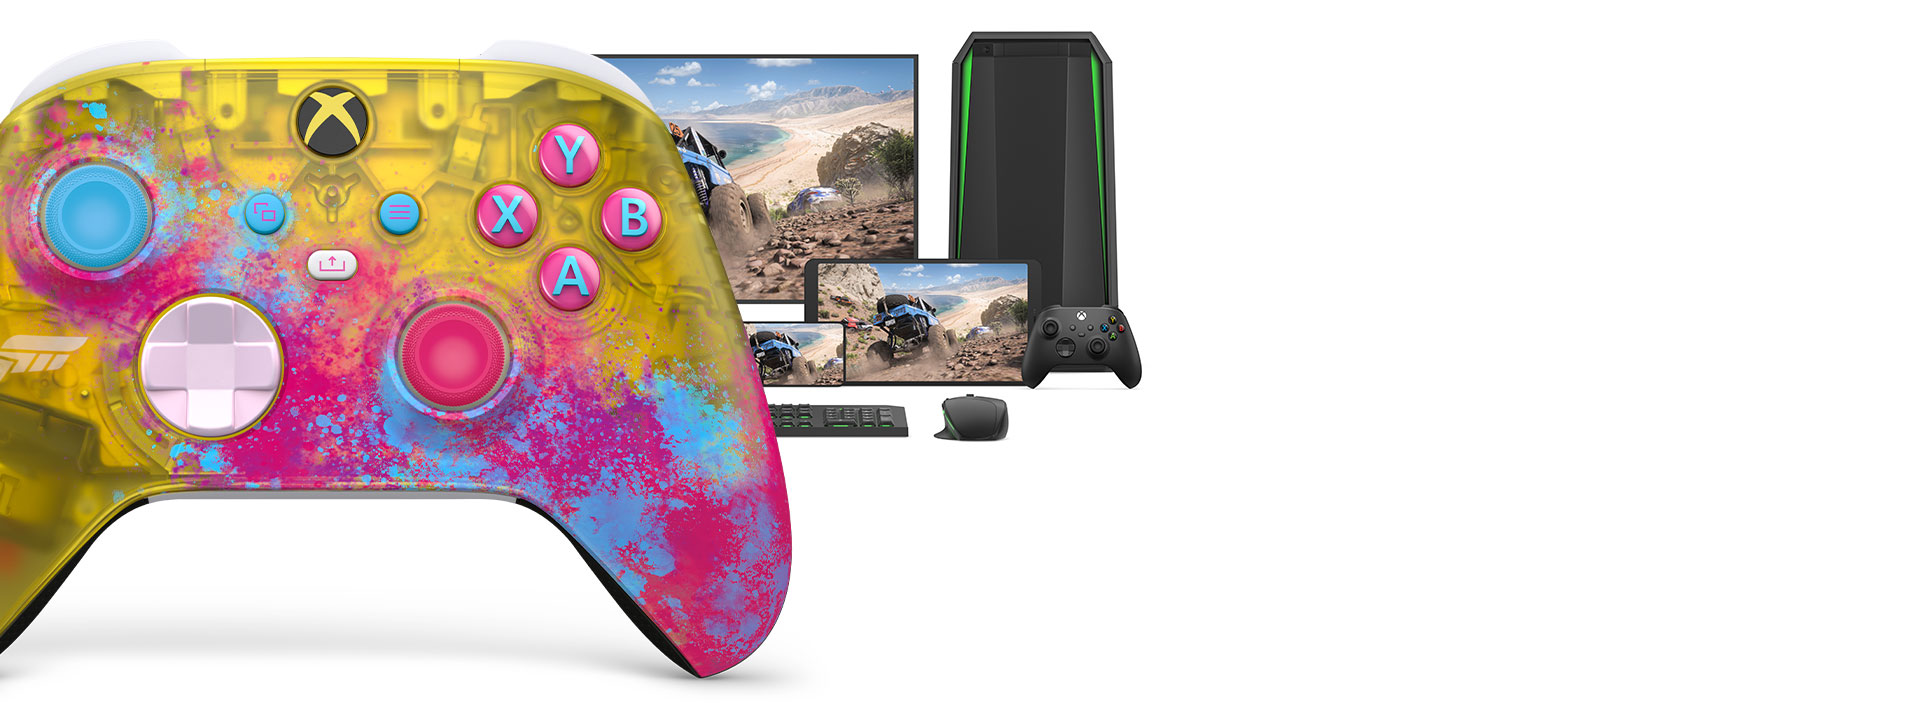 Xbox 無線控制器 Forza Horizon 5 與電腦、電視和 Xbox Series S